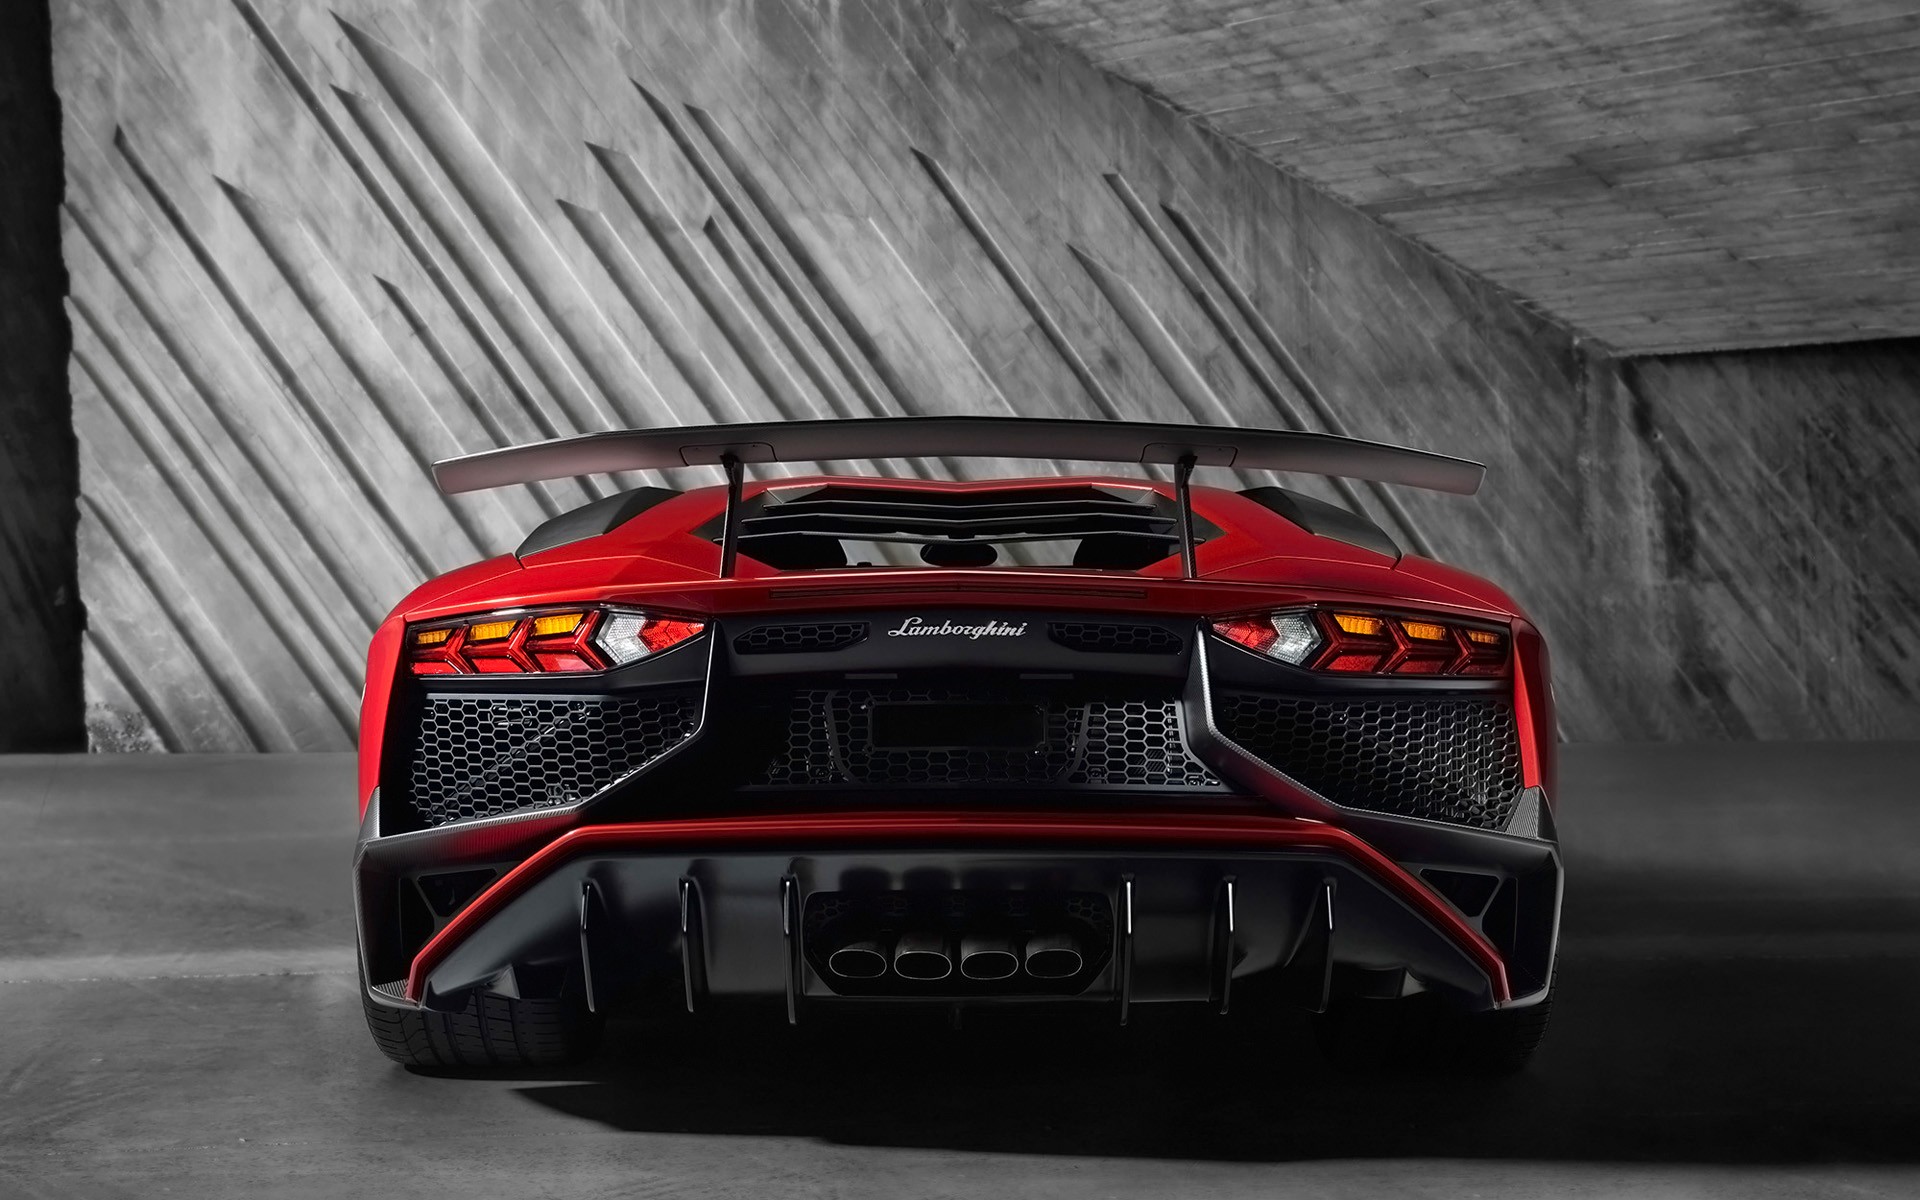 Featured image of post Wallpaper Lamborghini Aventador Drift Tron lamborghini aventador is part of the lamborghini wallpapers collection